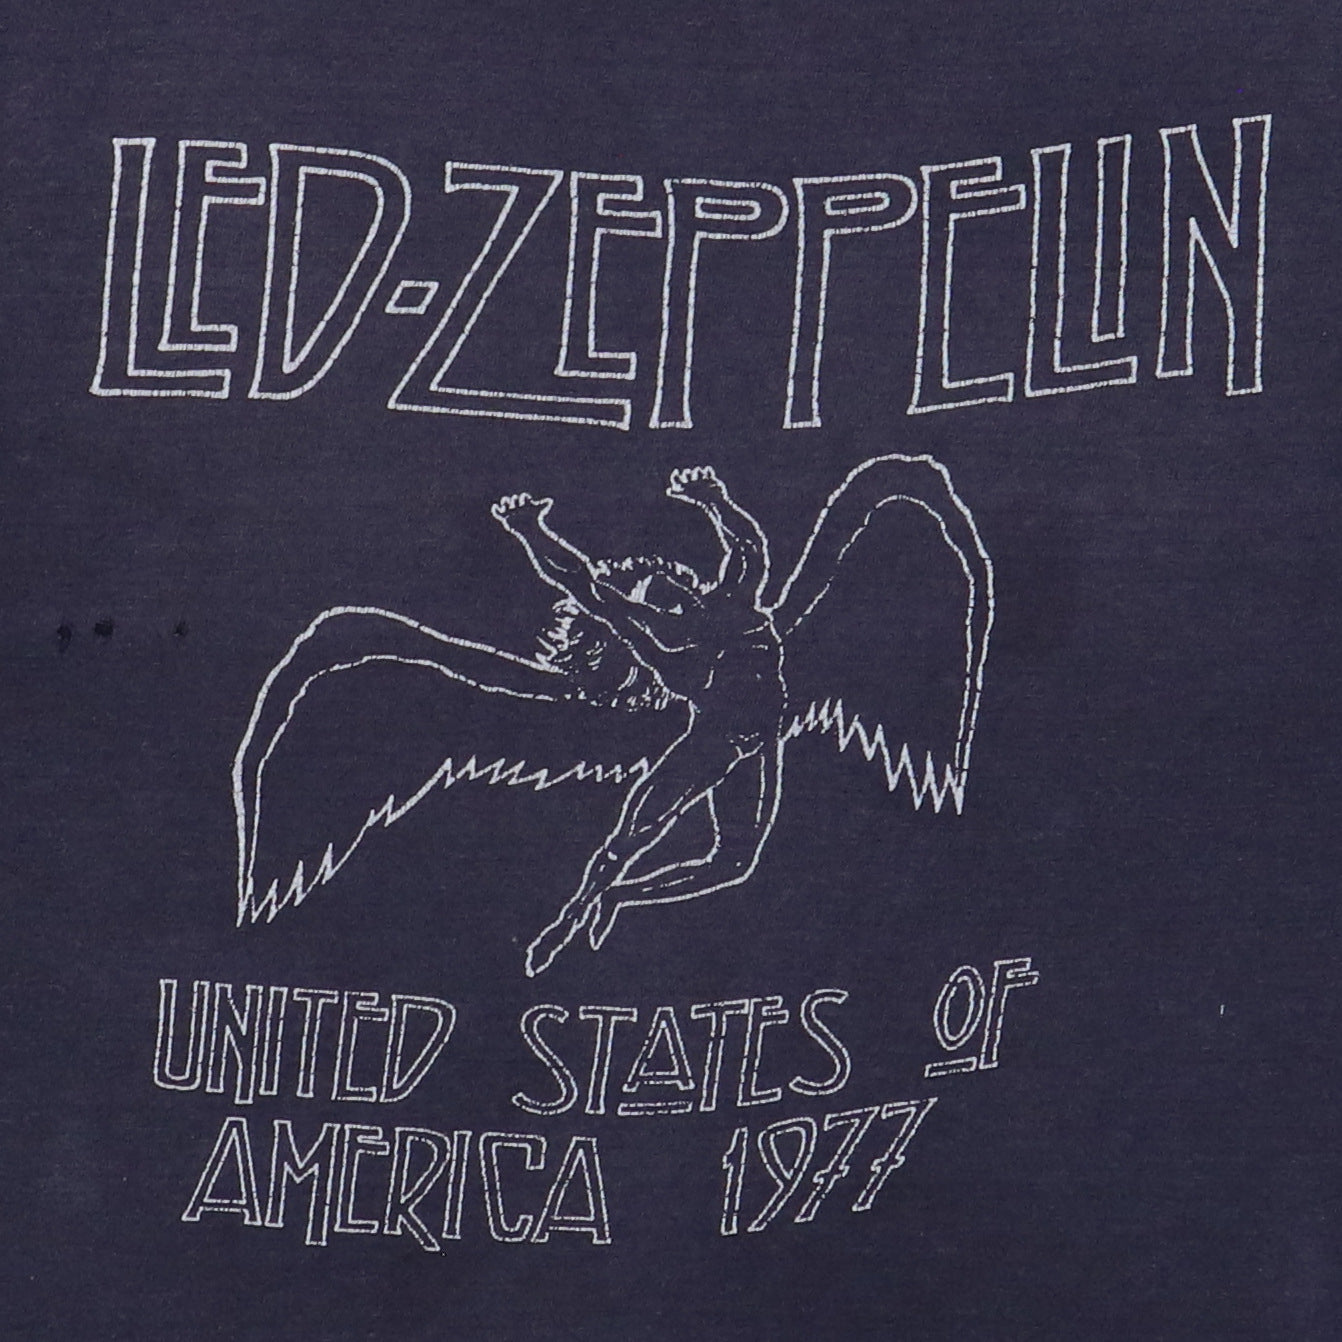 1977 Led Zeppelin Tour Shirt